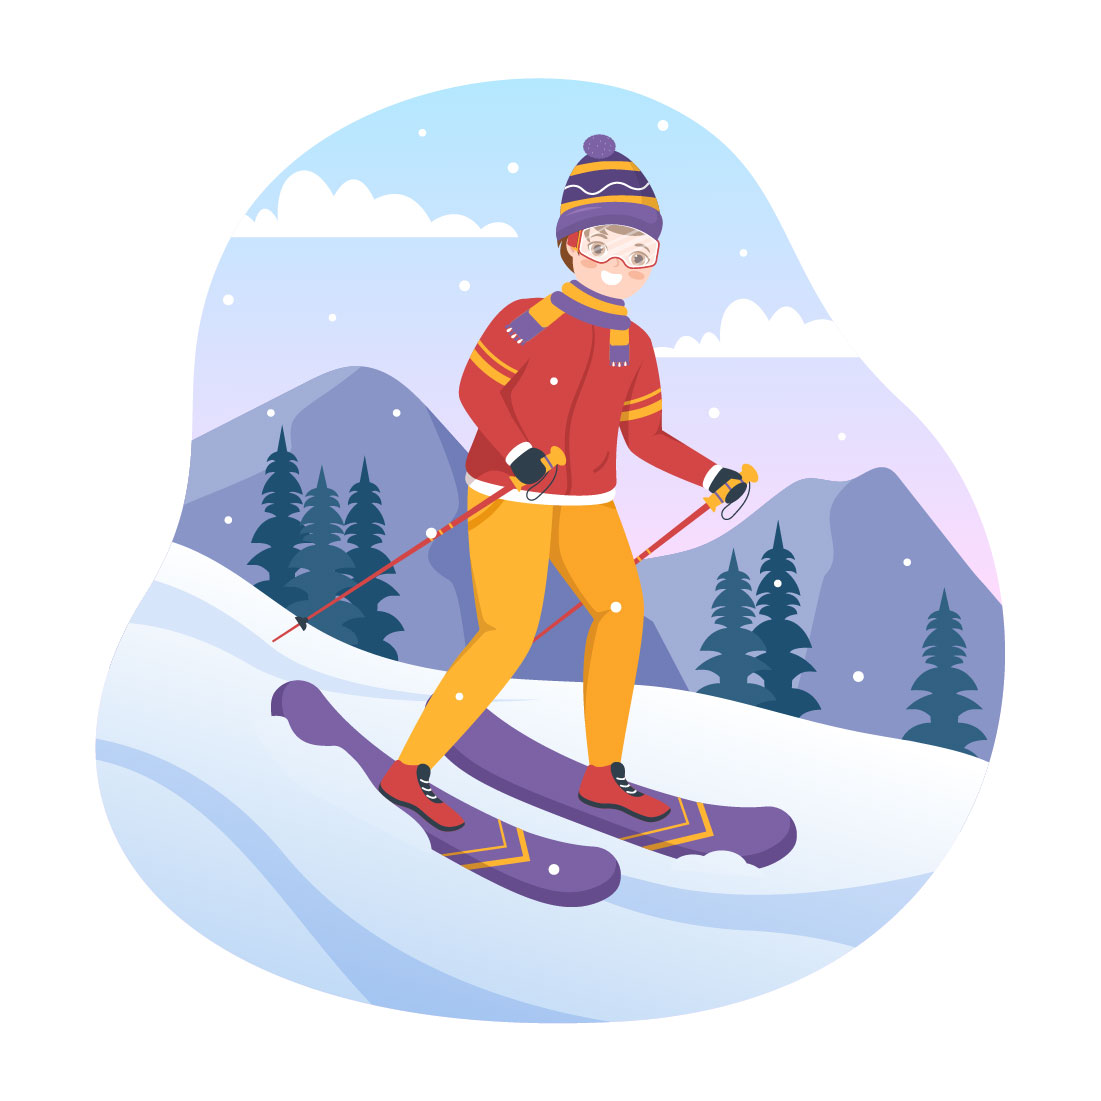 13 Ski Winter Sport Activities Illustration cover image.